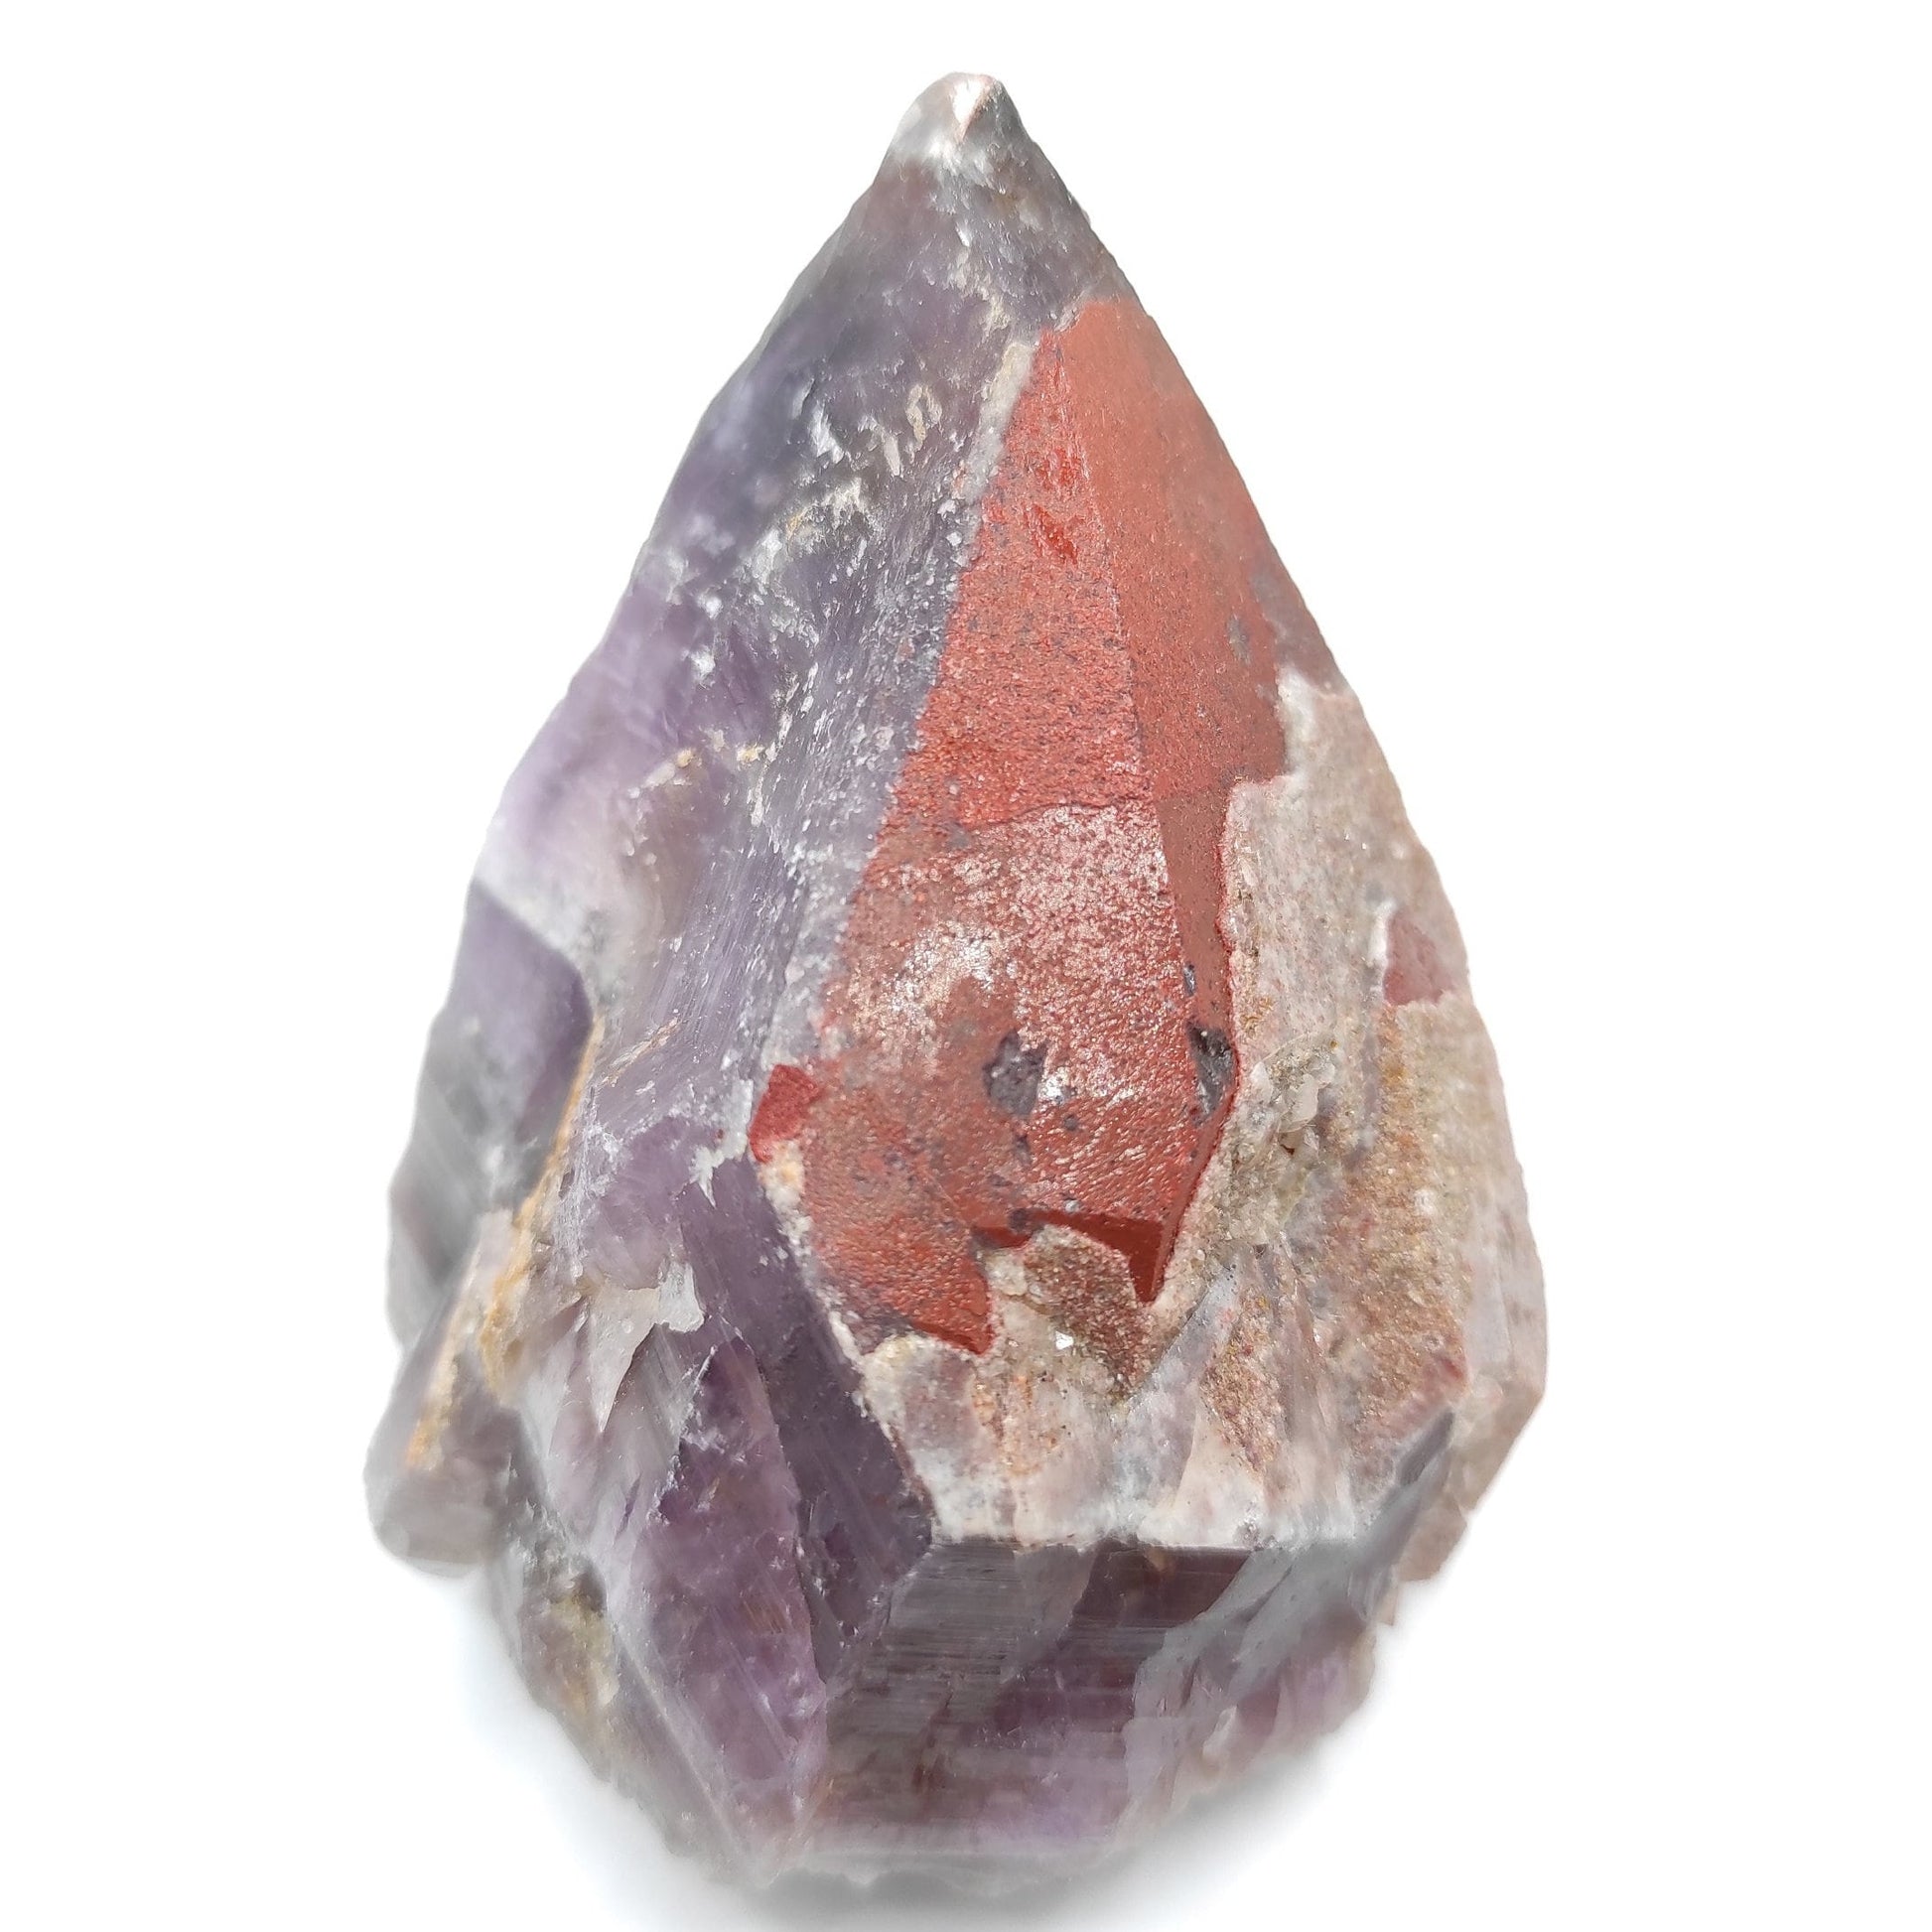 269g Thunder Bay Amethyst - Hematite Coated Amethyst - Canadian Amethyst Crystal - Amethyst Thunder Bay - Red Amethyst - Mineral Specimen